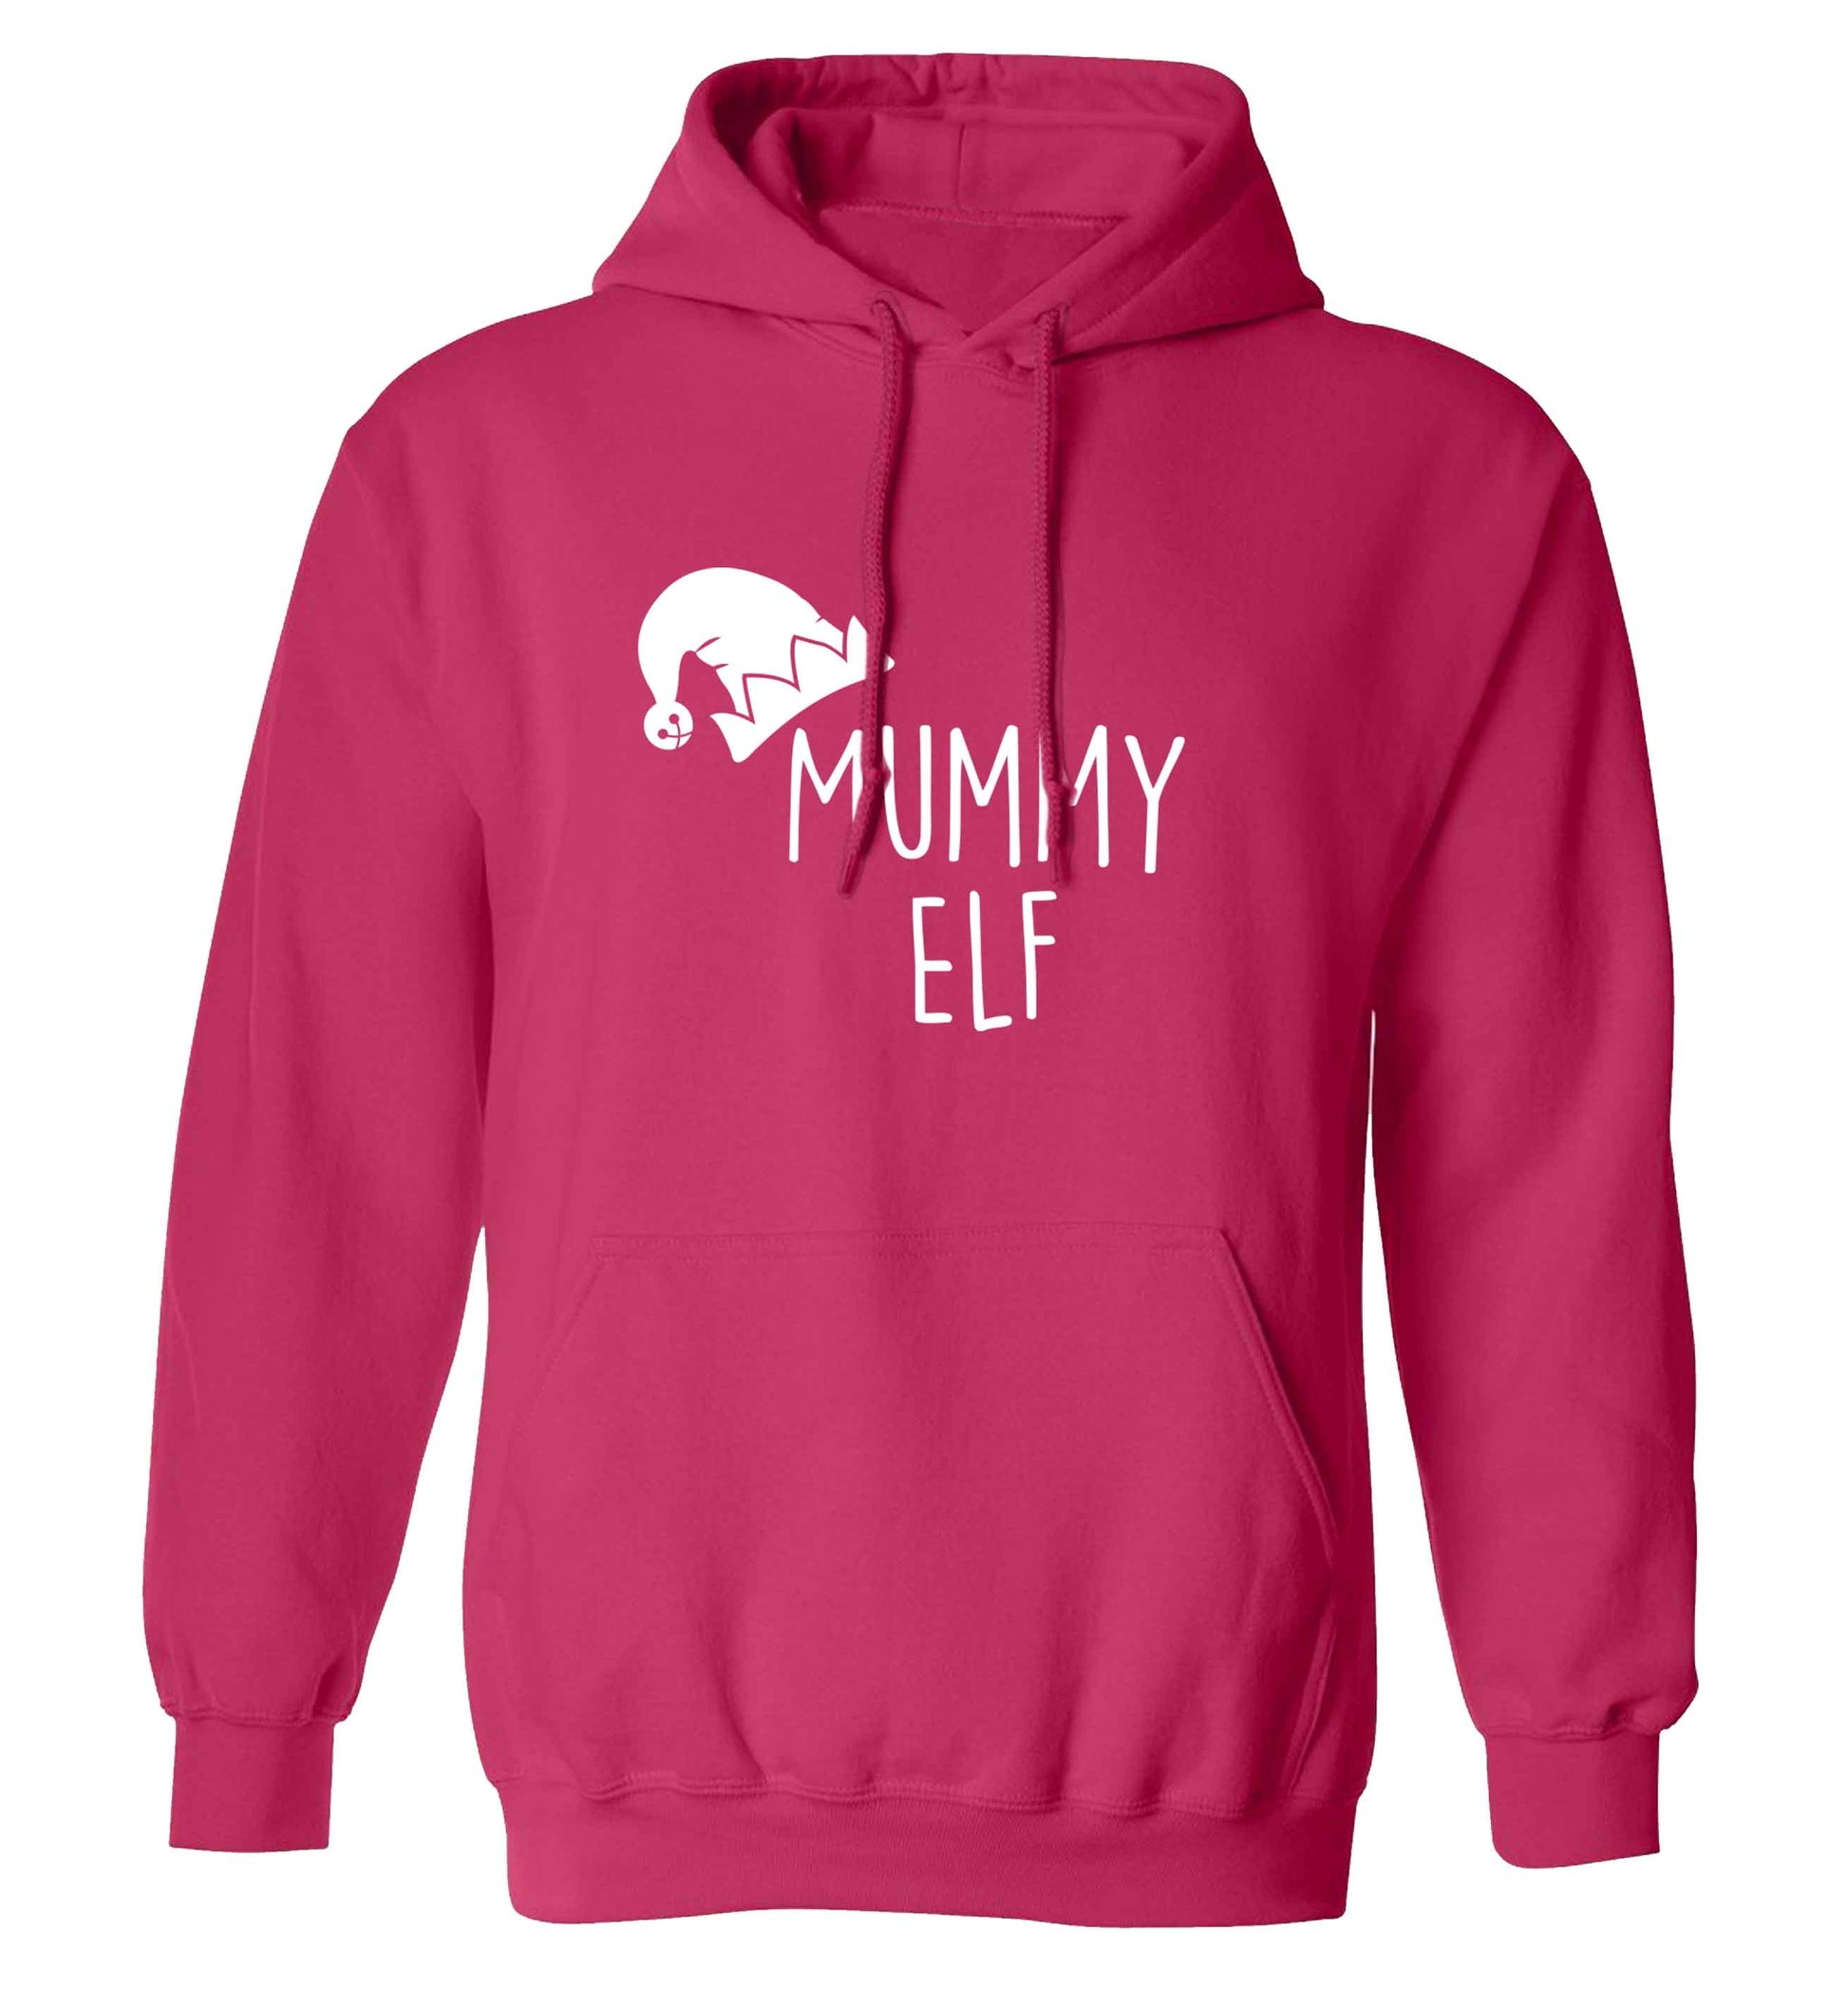 Mummy elf adults unisex pink hoodie 2XL